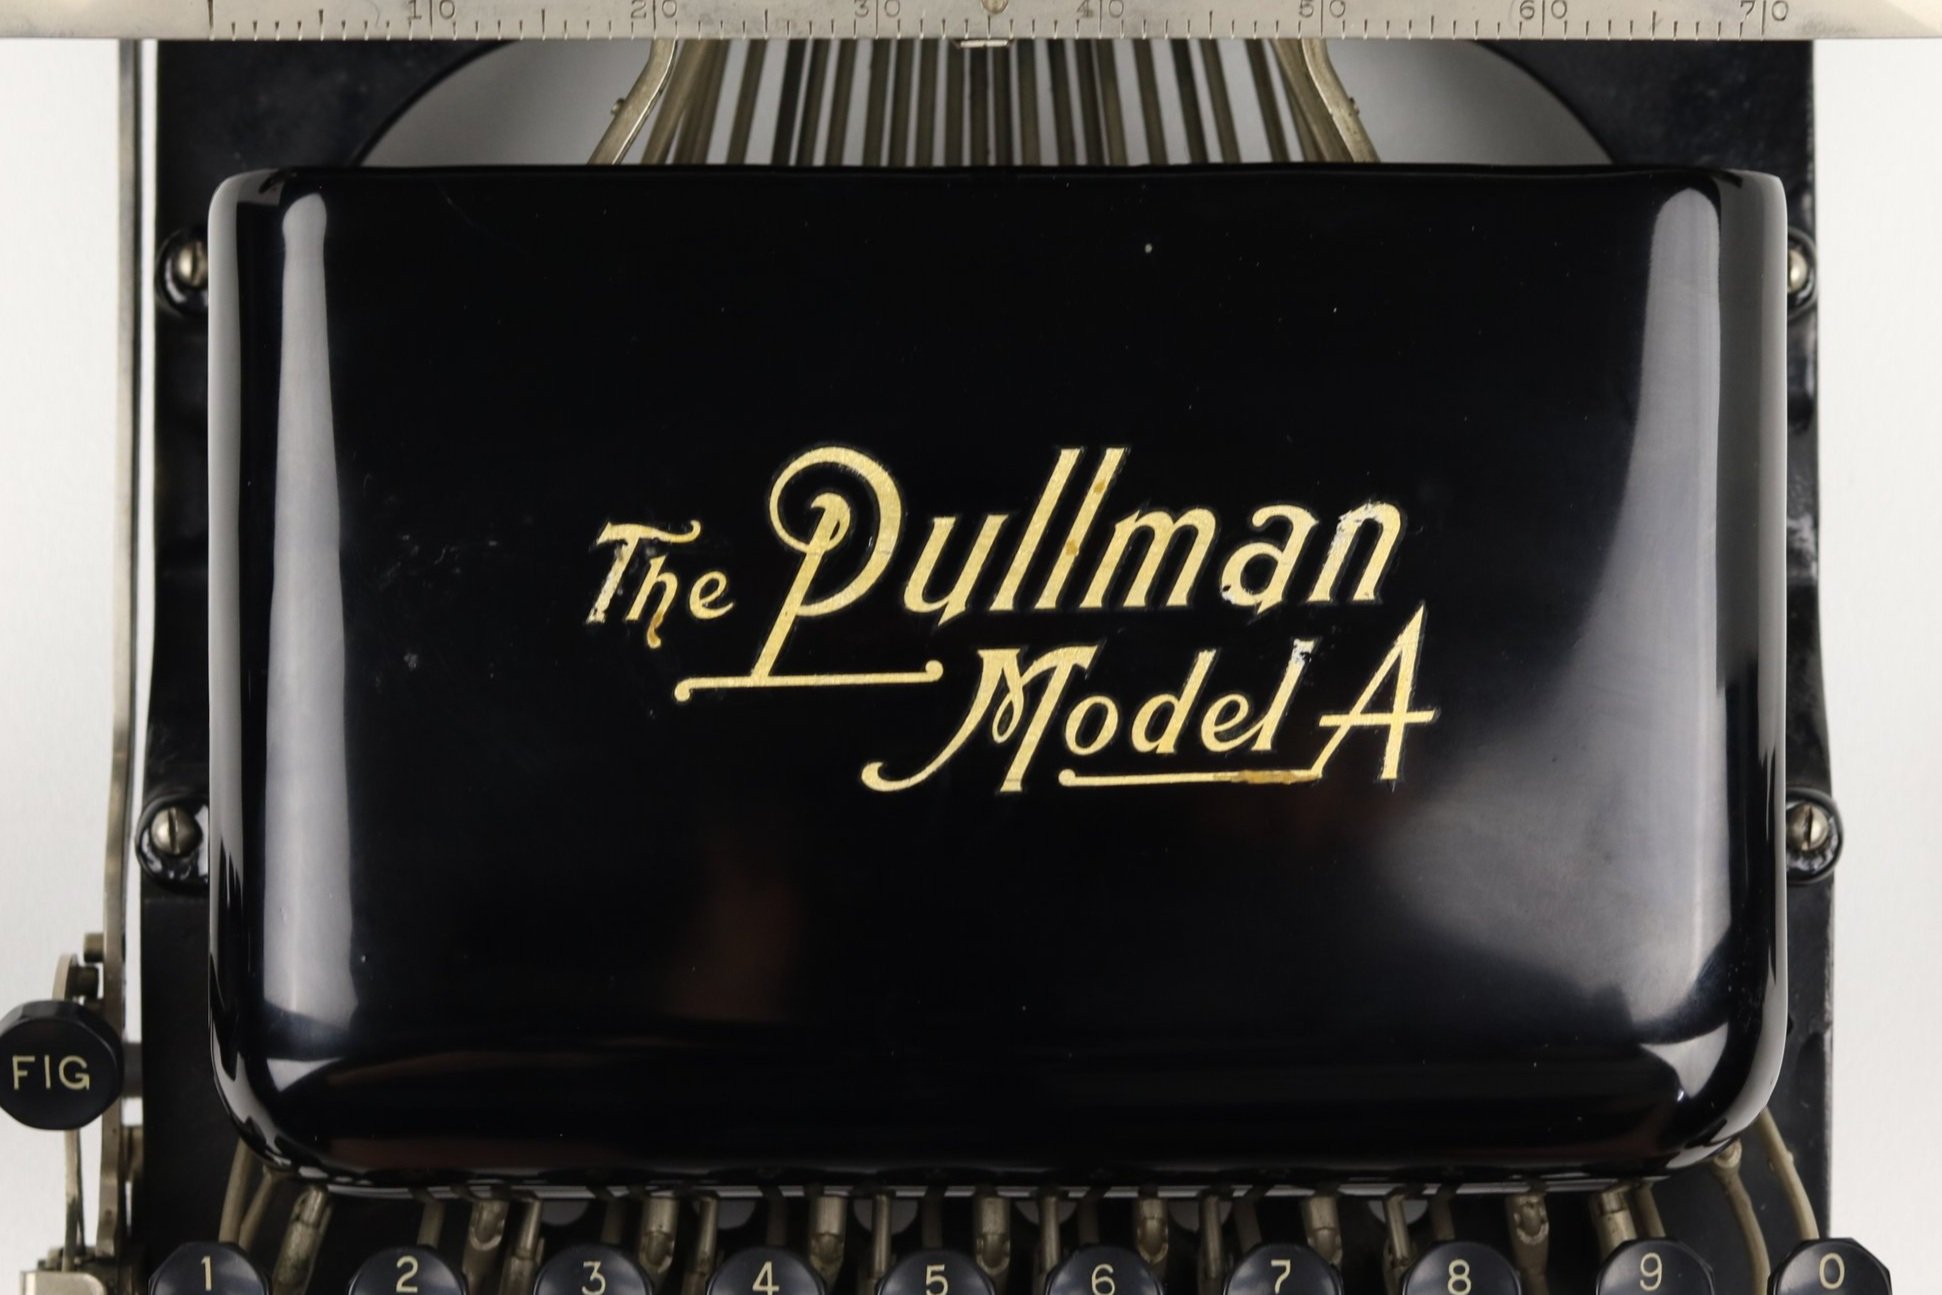 The Pullman Model A Typewriter - The American Typewriter Co. 265 Broadway, new York